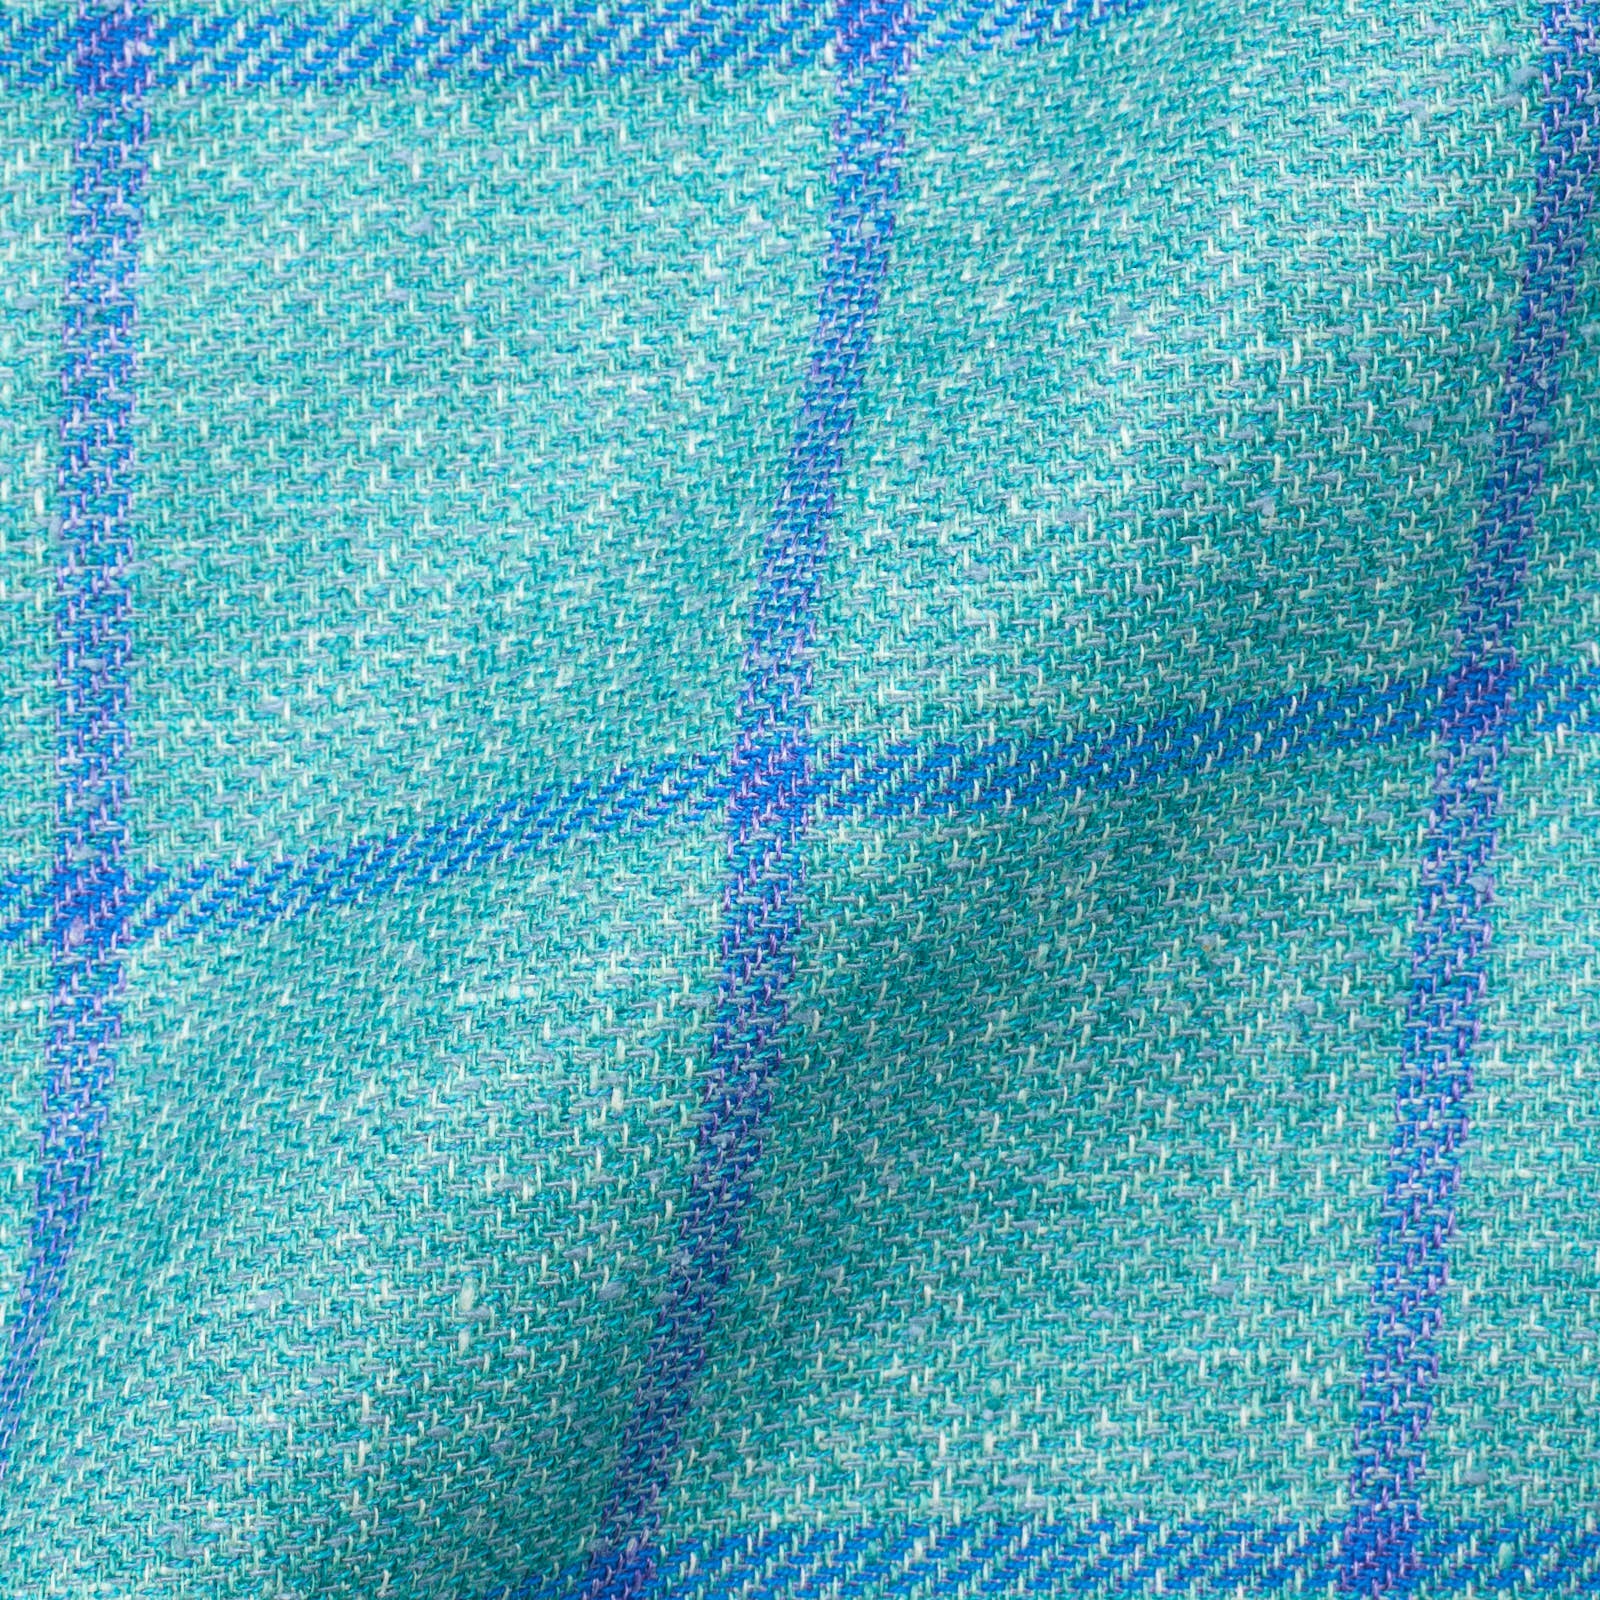 SARTORIA PARTENOPEA Turquoise Windowpane Linen-Wool-Silk Jacket NEW Current Model